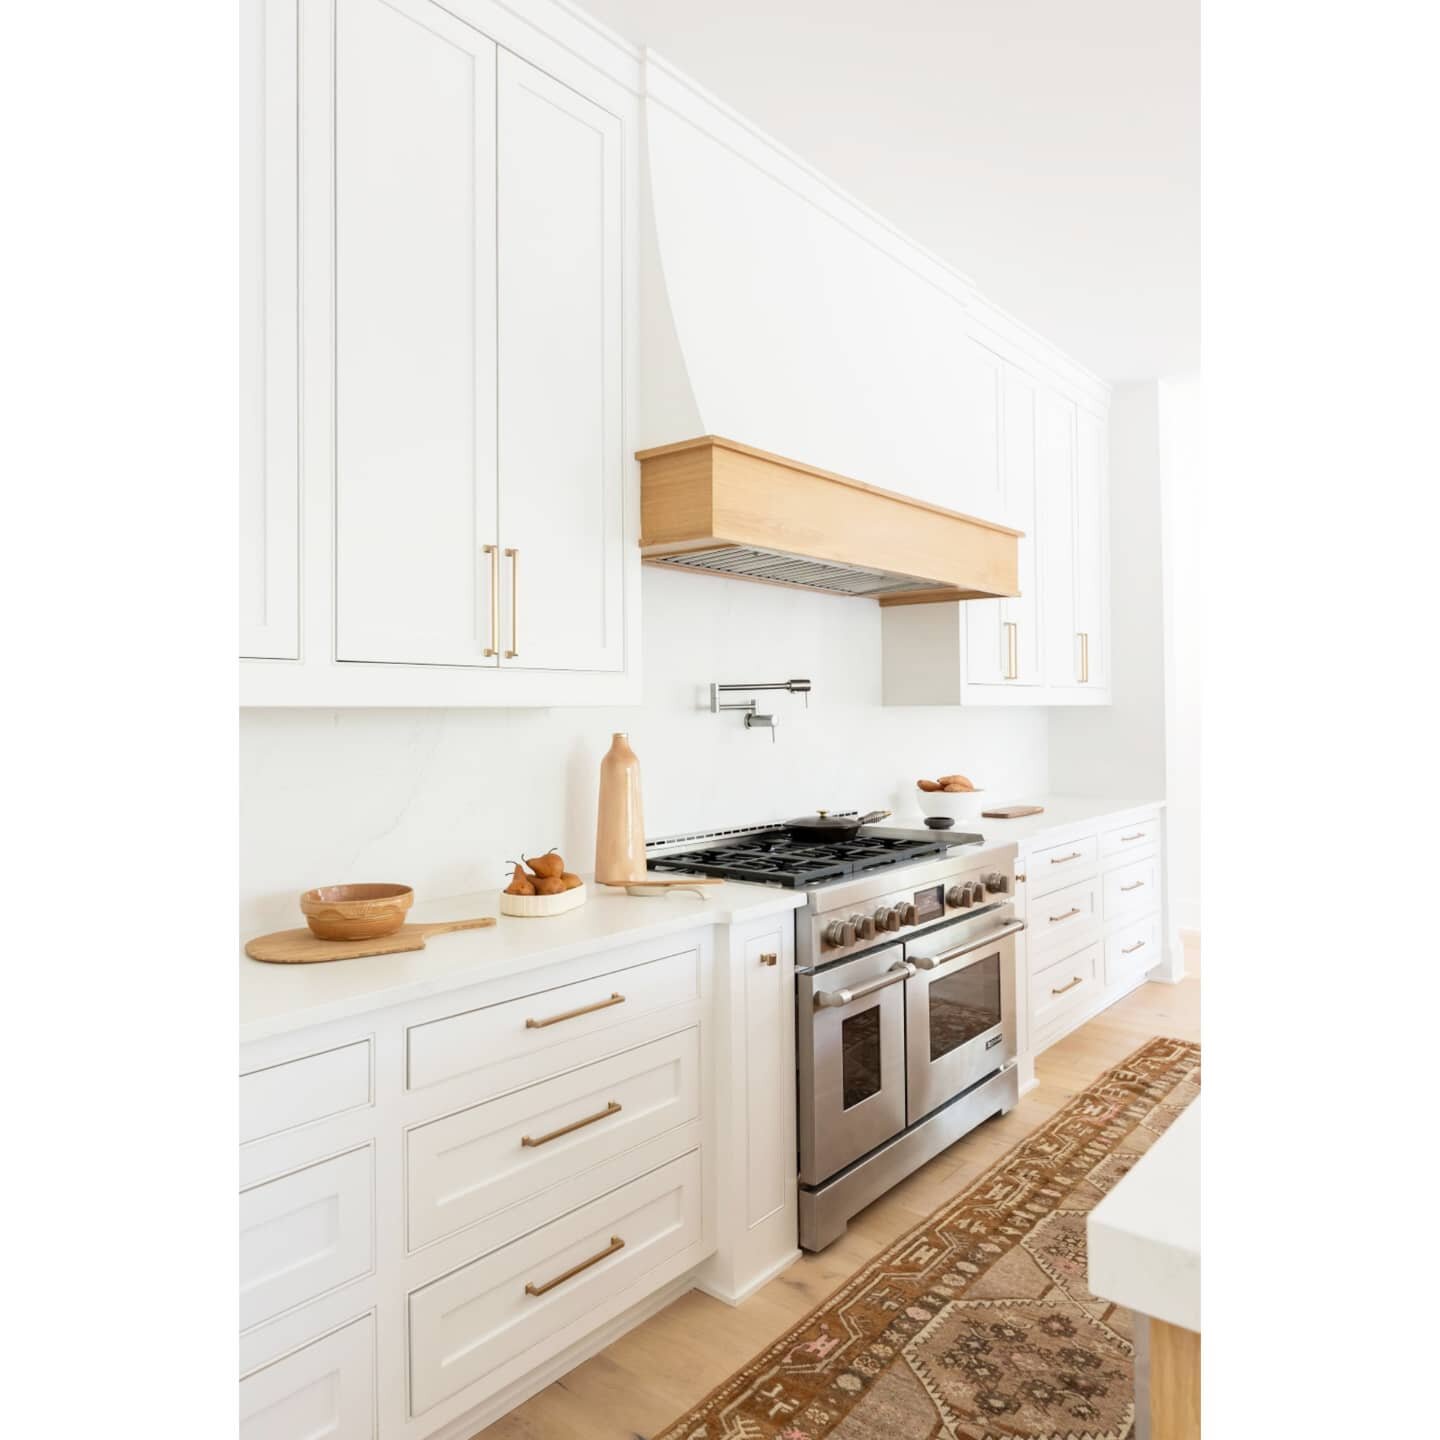 A warm, white Kitchen. 
Design @andriafromminteriors 
Photo @rubyandpeachphoto